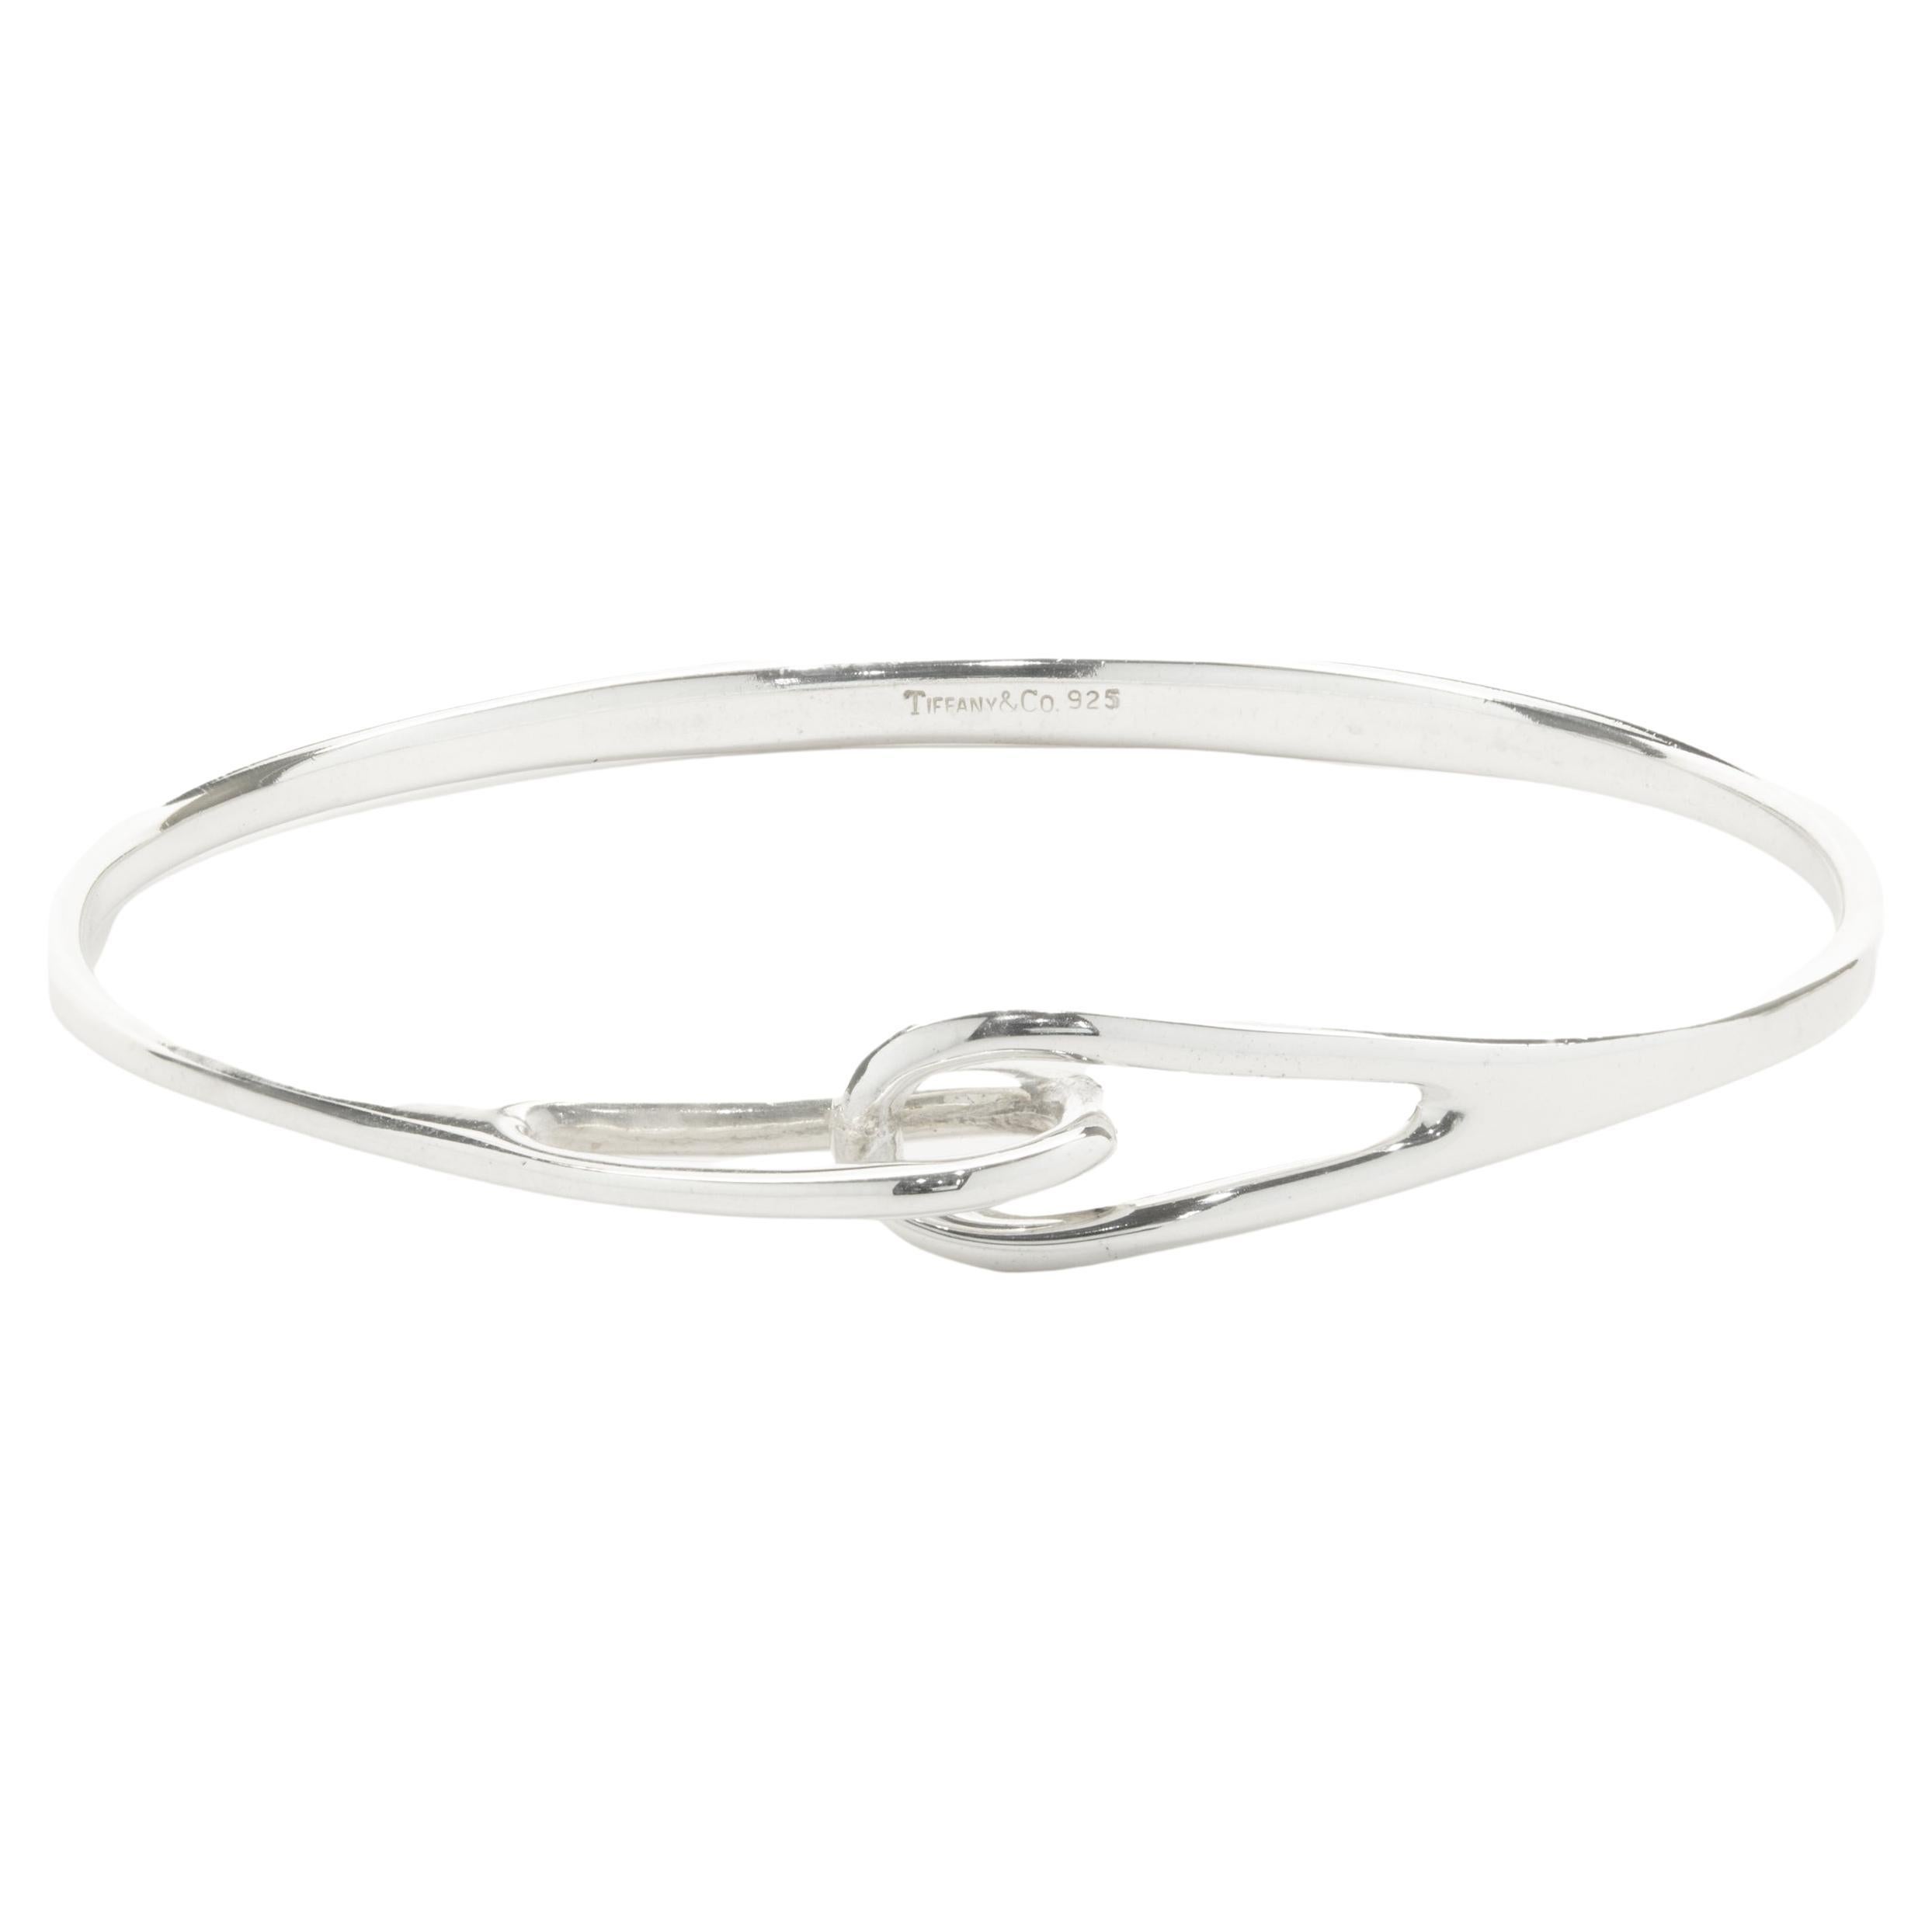 Tiffany & Co. Sterling Silver Interlocking Loop Bangle Bracelet